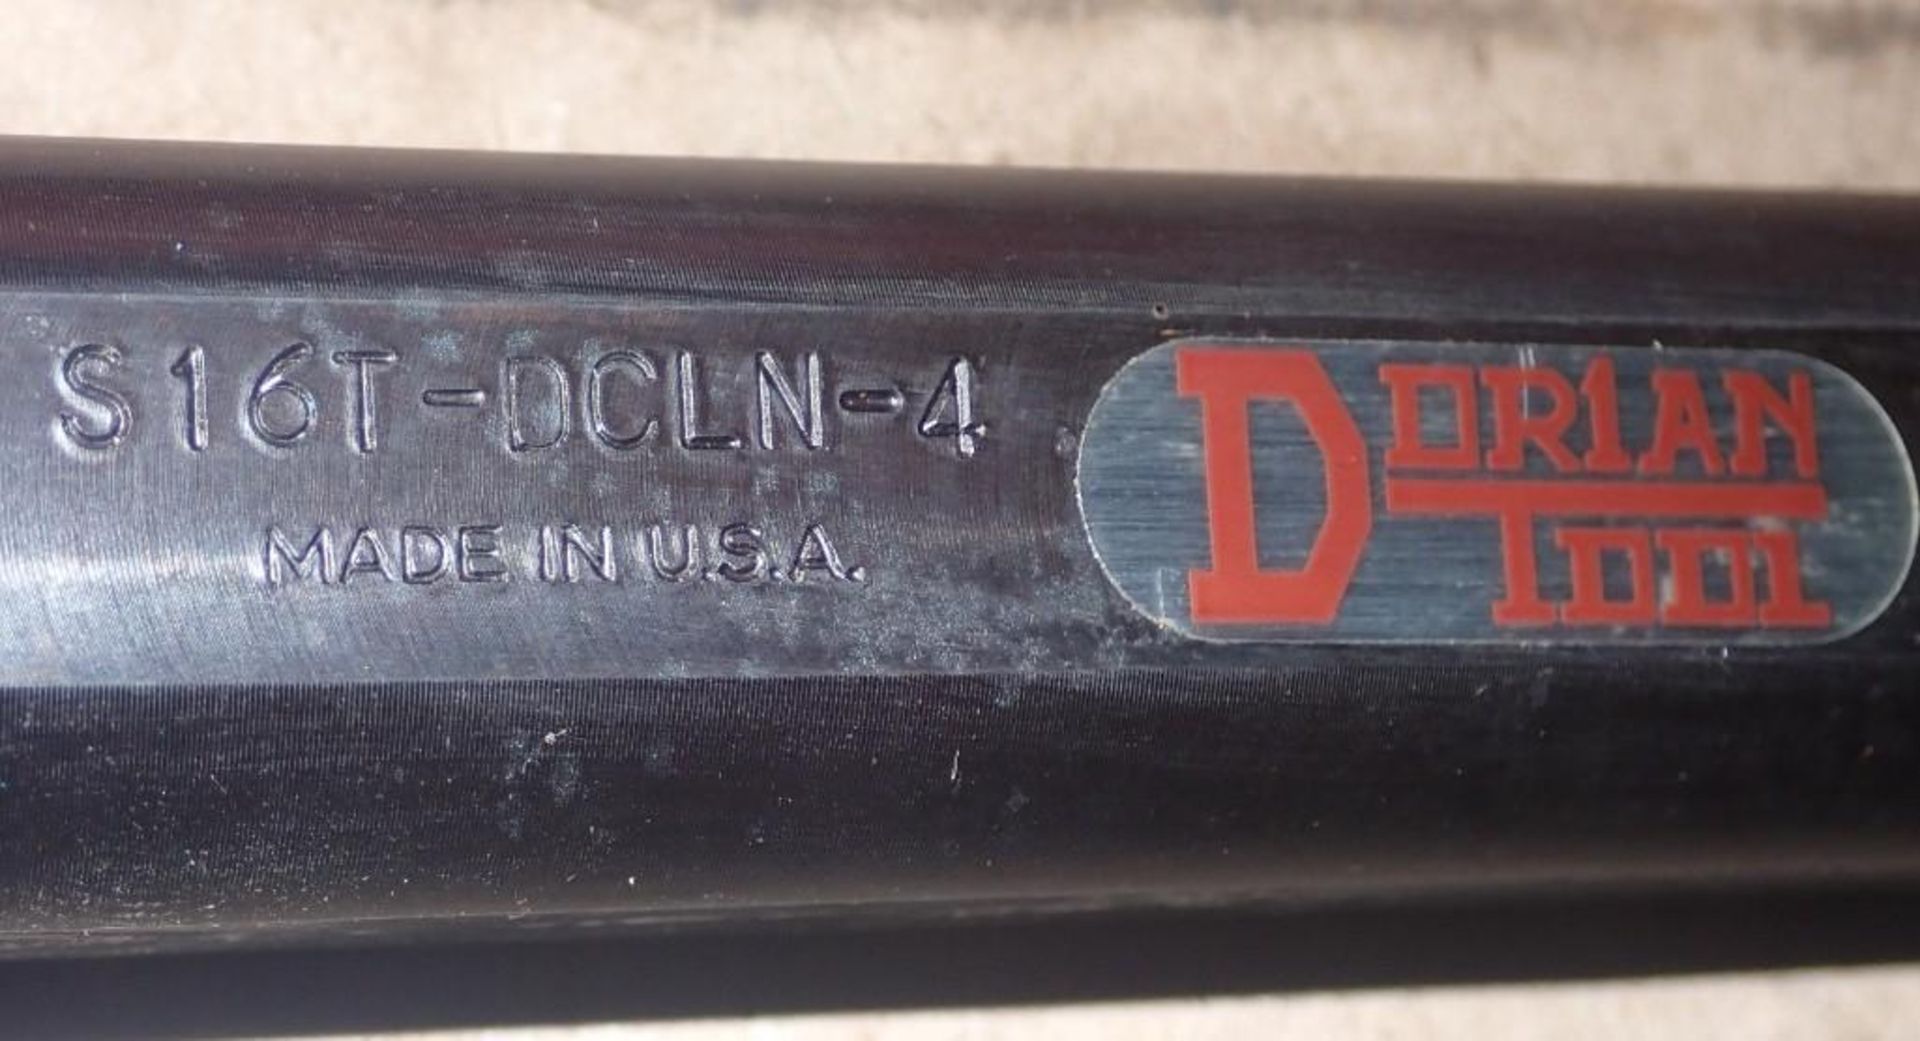 Dorian #S16T-DCLN-4 Double Insert Boring Bar - Image 3 of 3